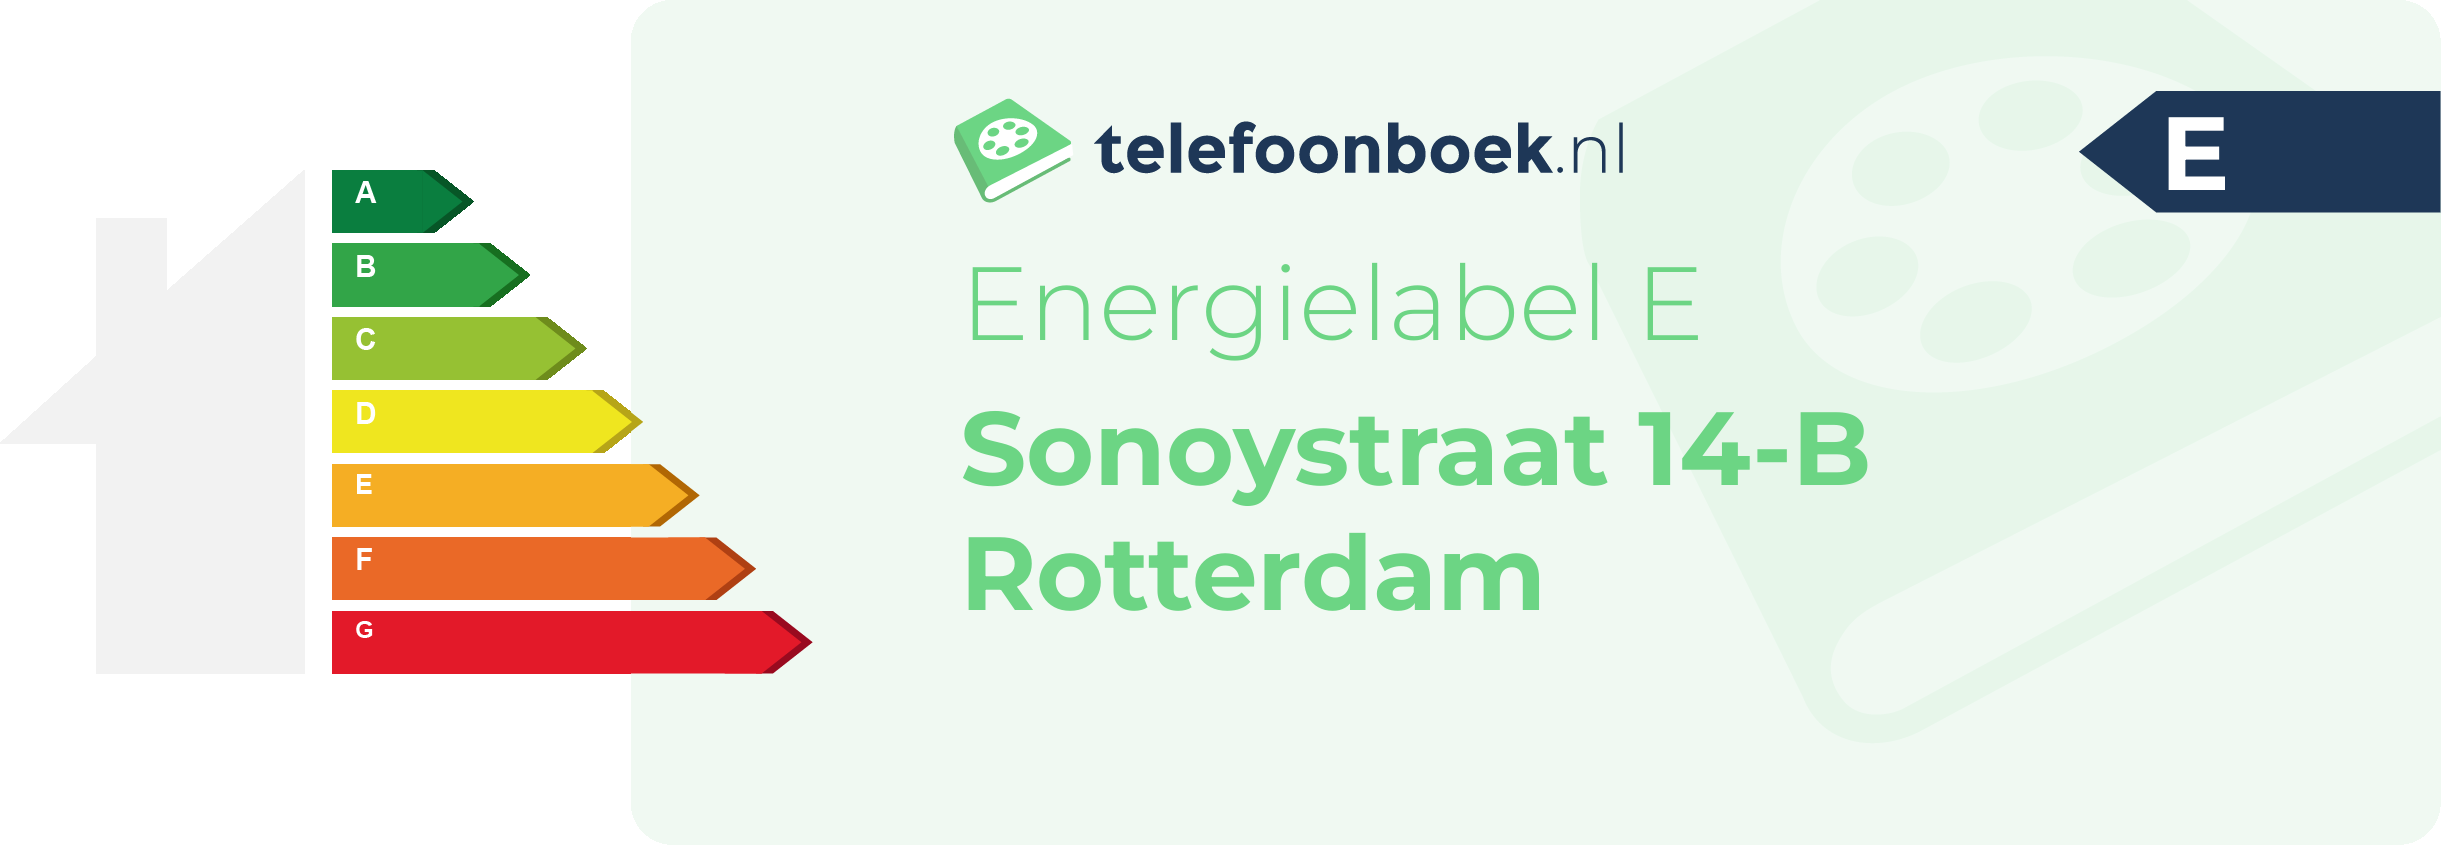 Energielabel Sonoystraat 14-B Rotterdam